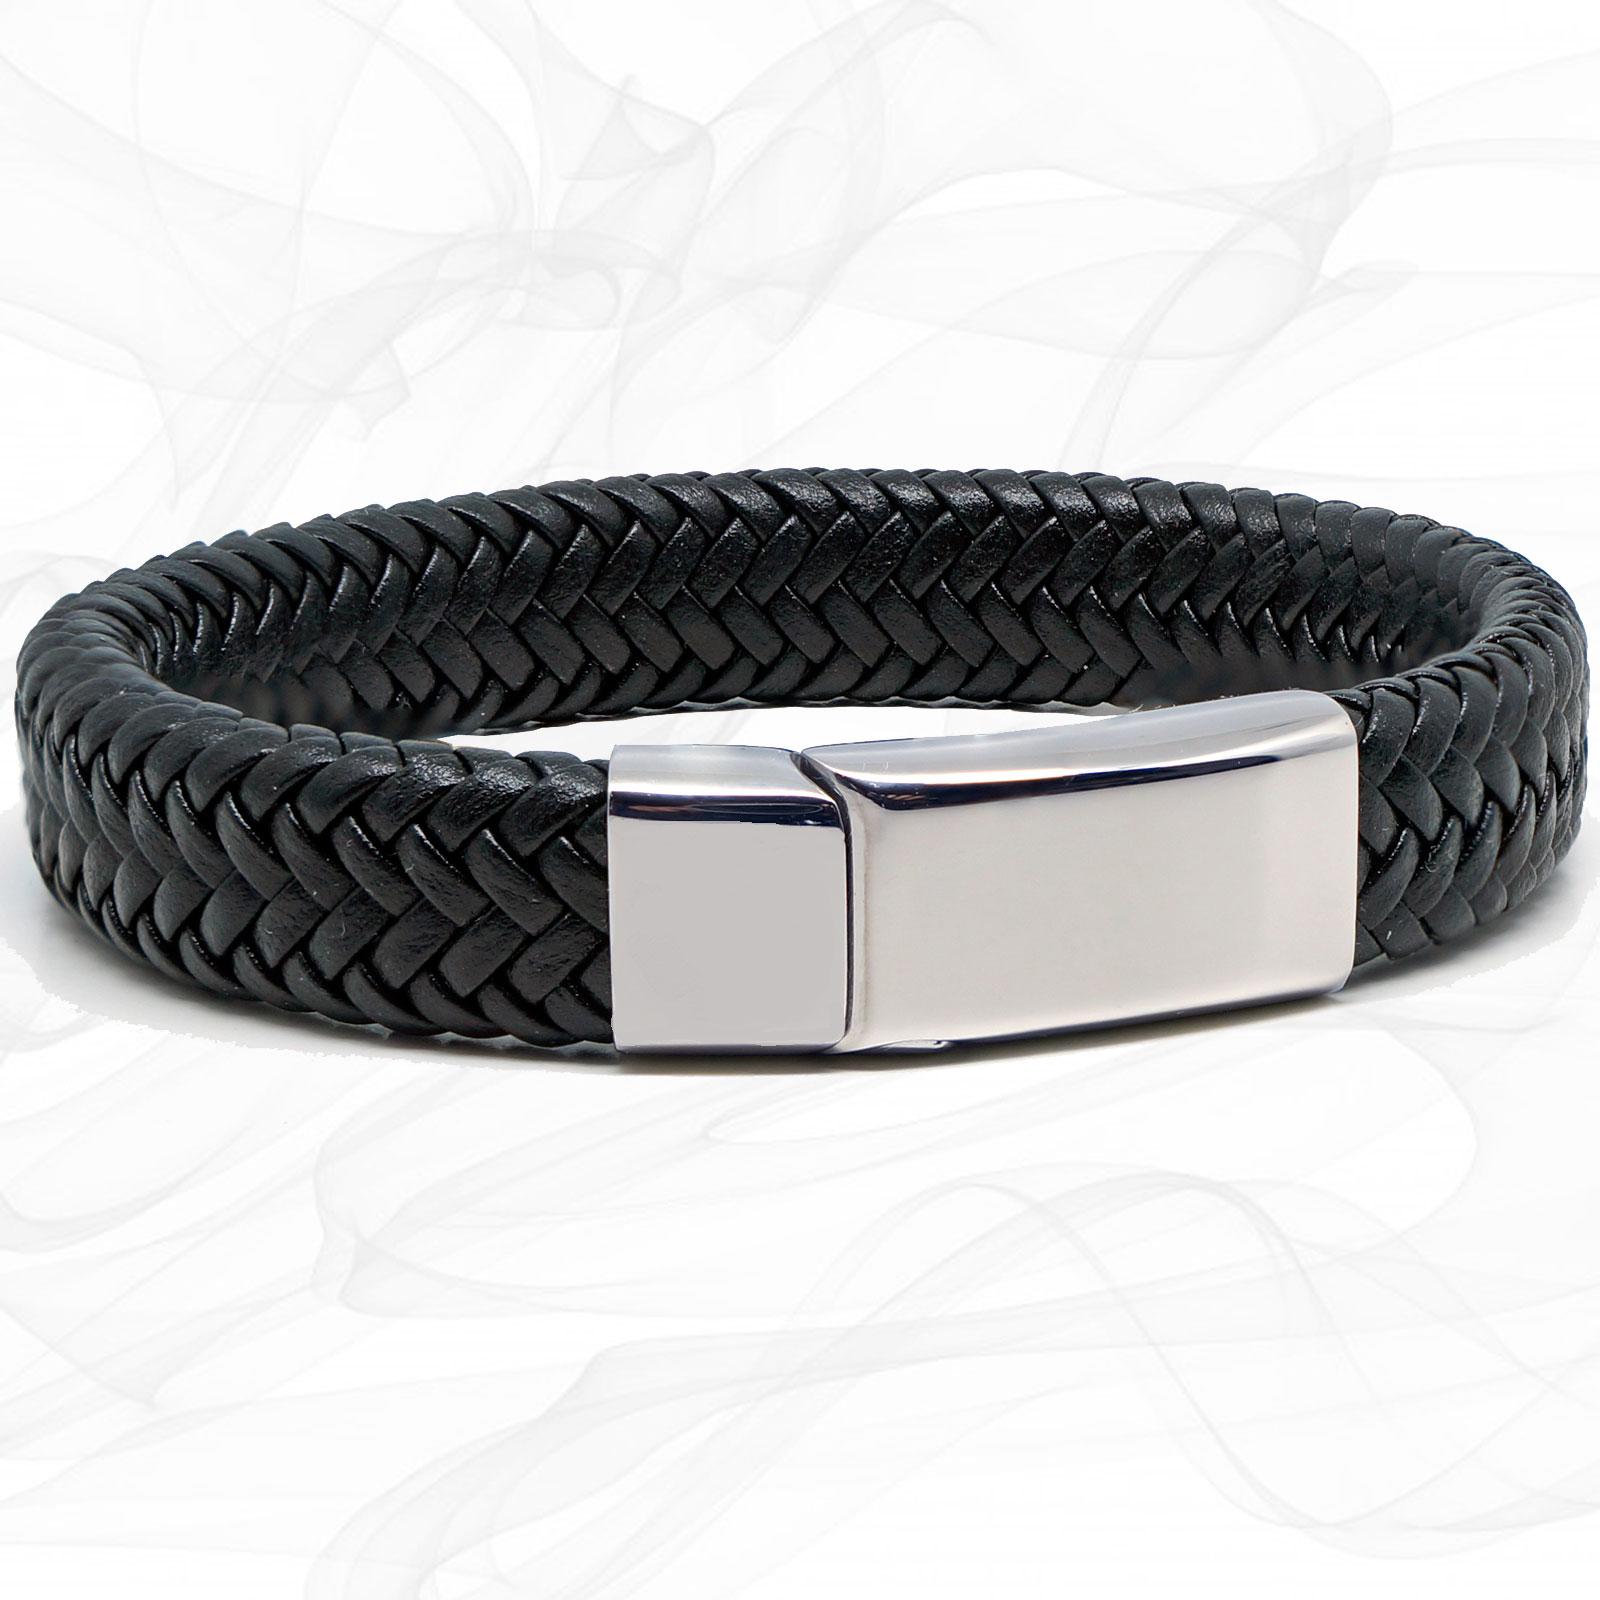 Wide Black Super Soft Premium Leather Bracelet with a Sliding Magnetic Clasp.